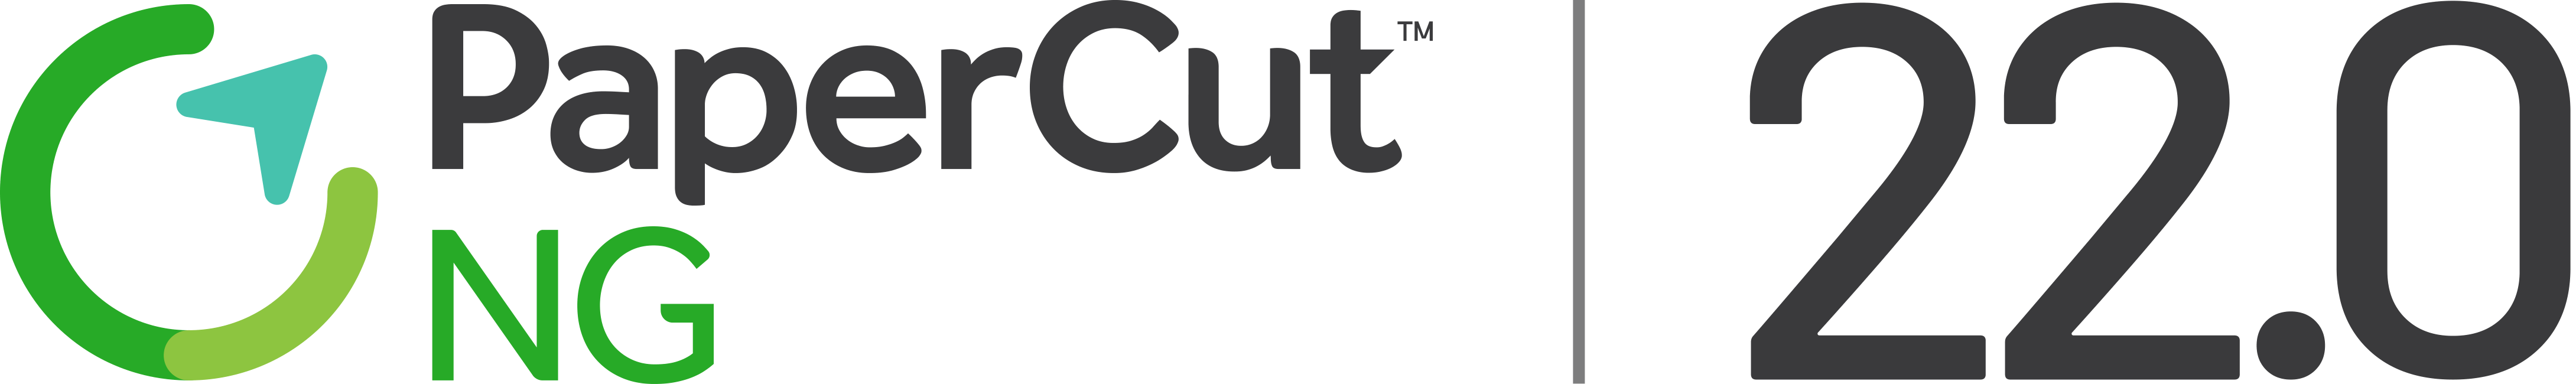 PaperCut NG 22.0 logo